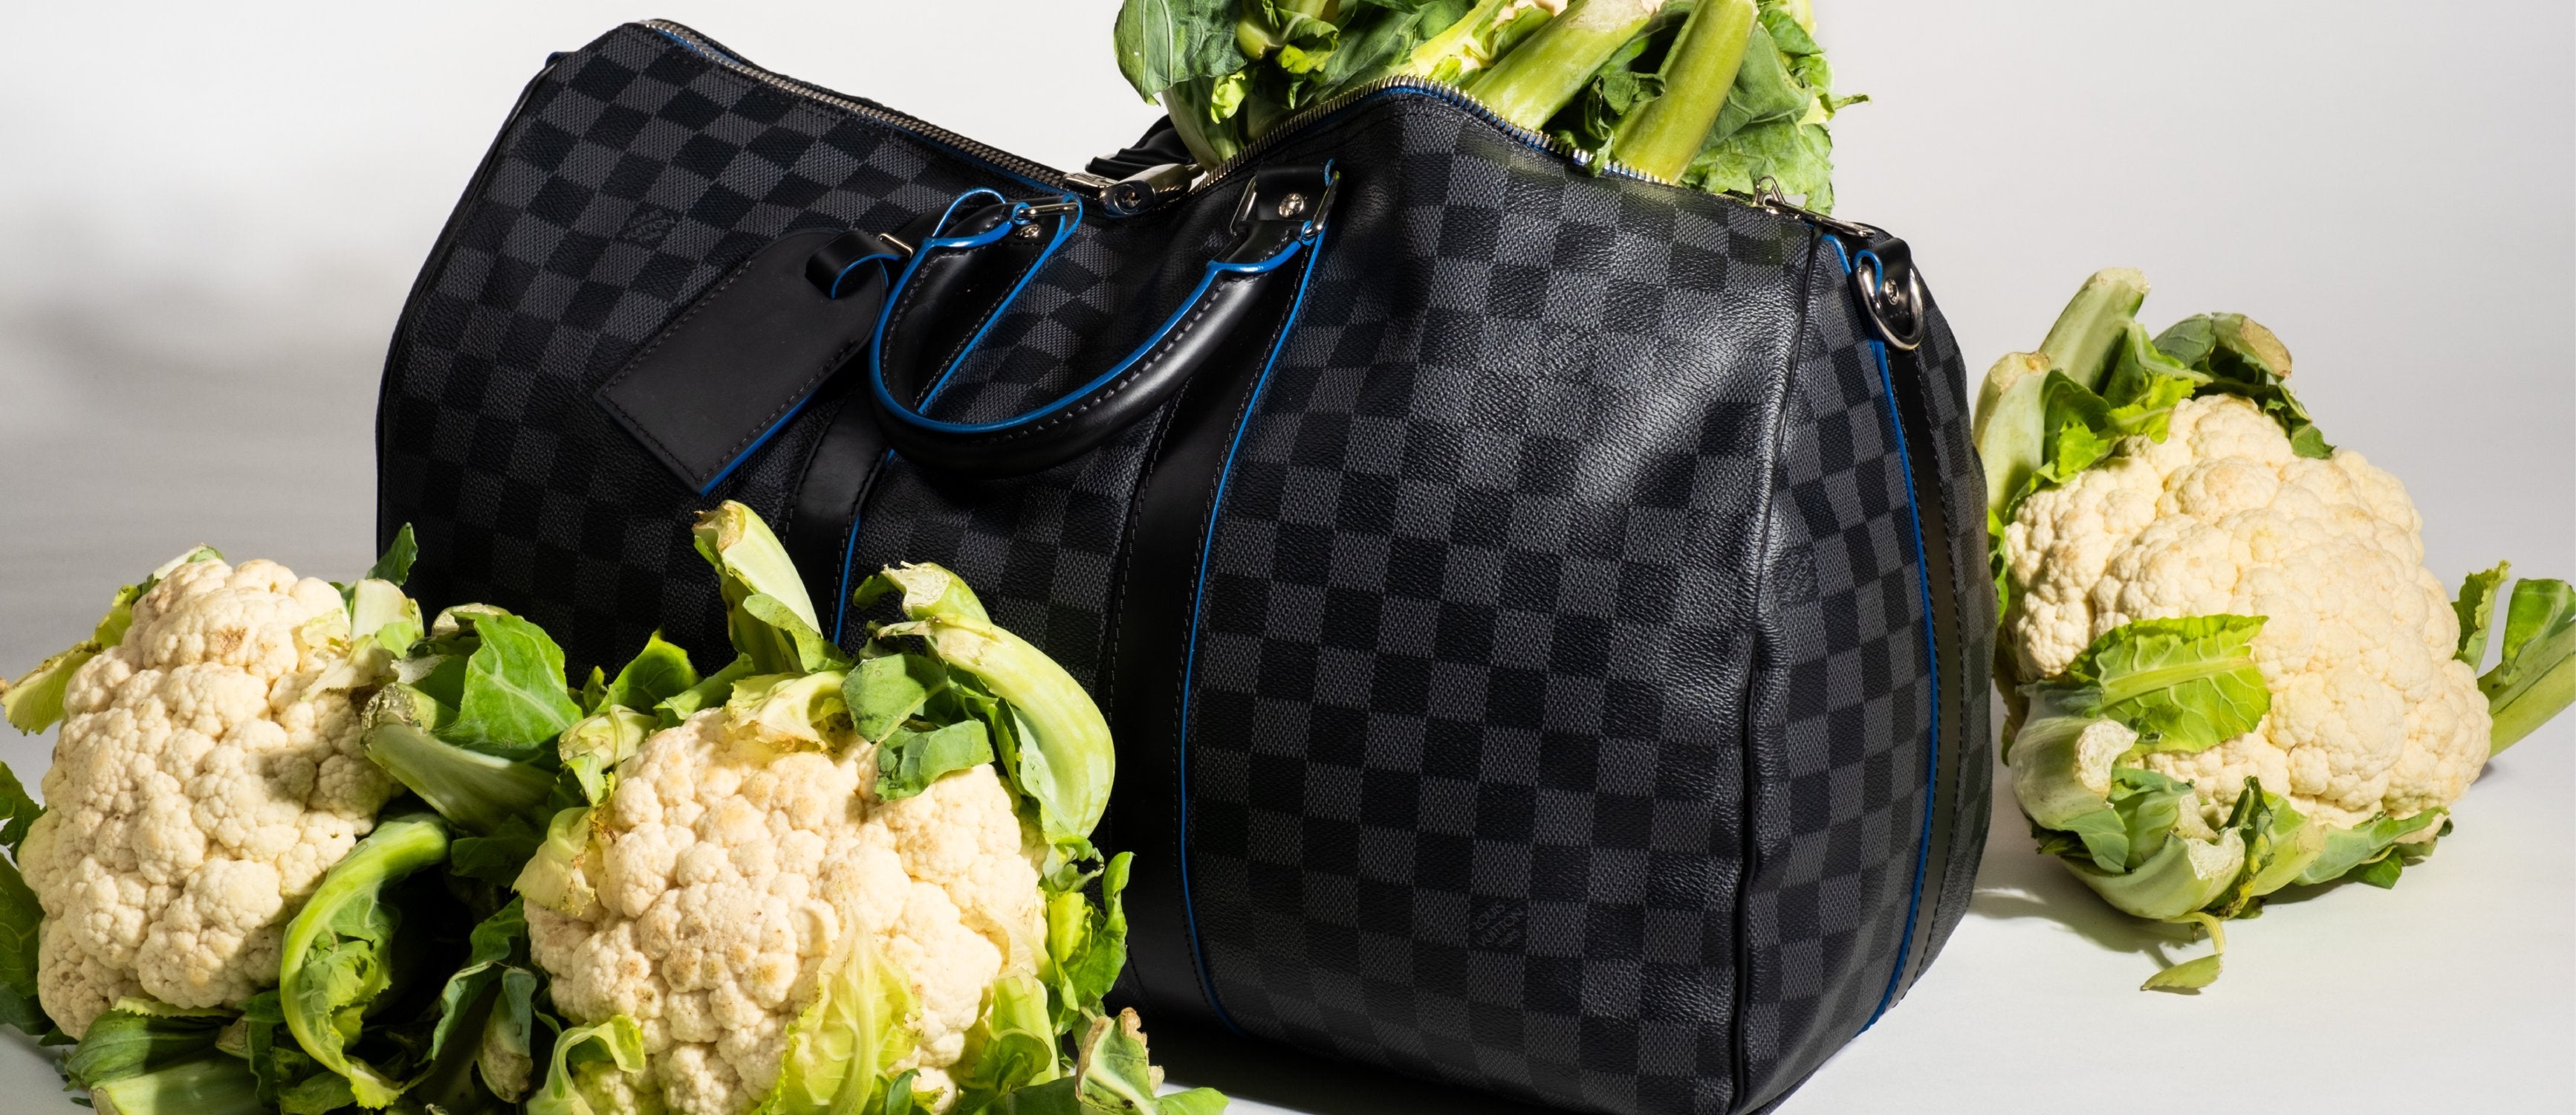 Louis Vuitton Epi Leather Keepall 45 Duffle Bag, Louis Vuitton Handbags